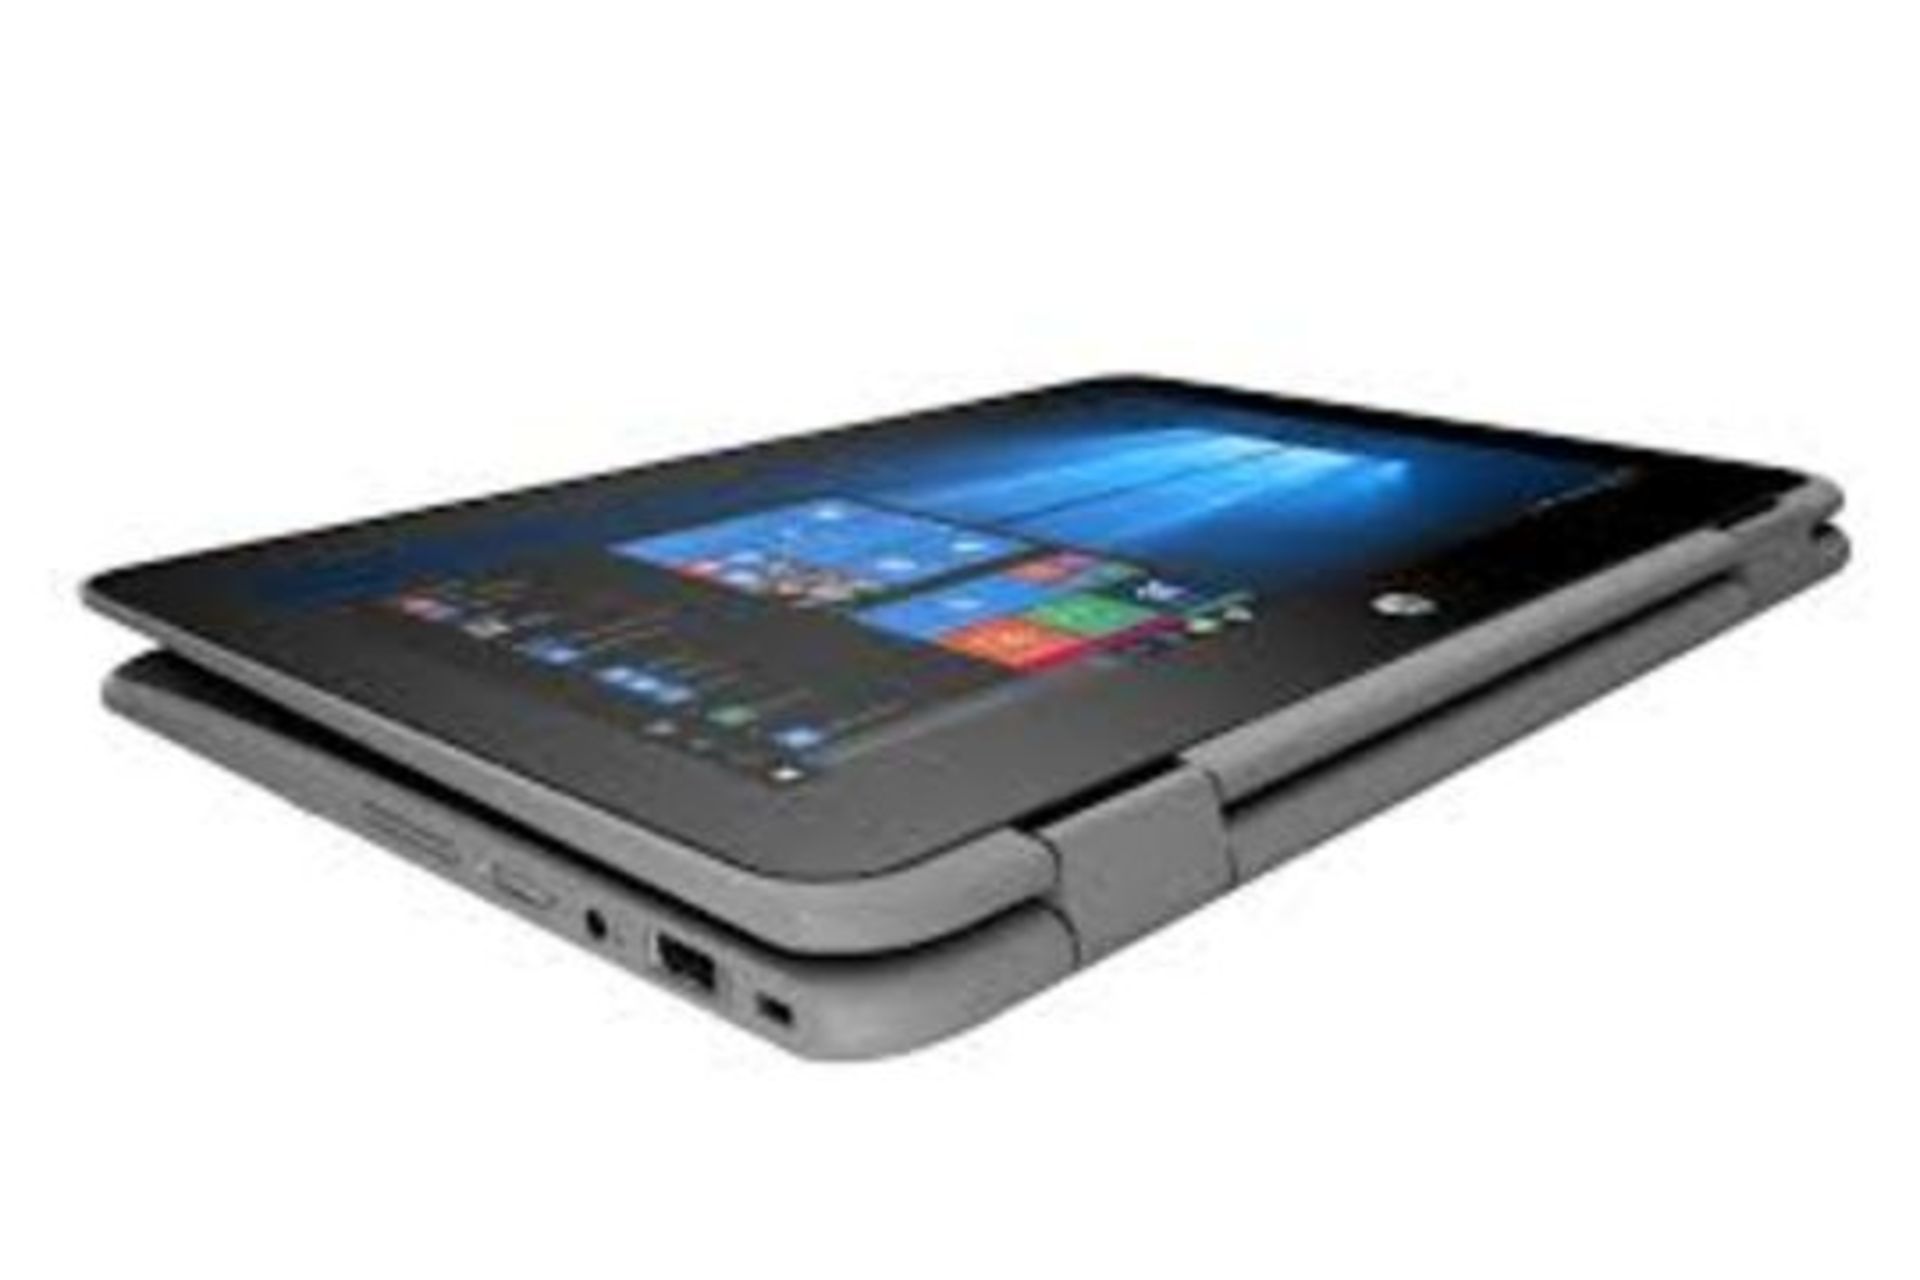 5 X HP ProBook x360 11 G1 EE 2 IN 1 Laptops (Pentium Quad Core/4 GB/128 GB SSD) RRP £450 EACH. - Image 2 of 3